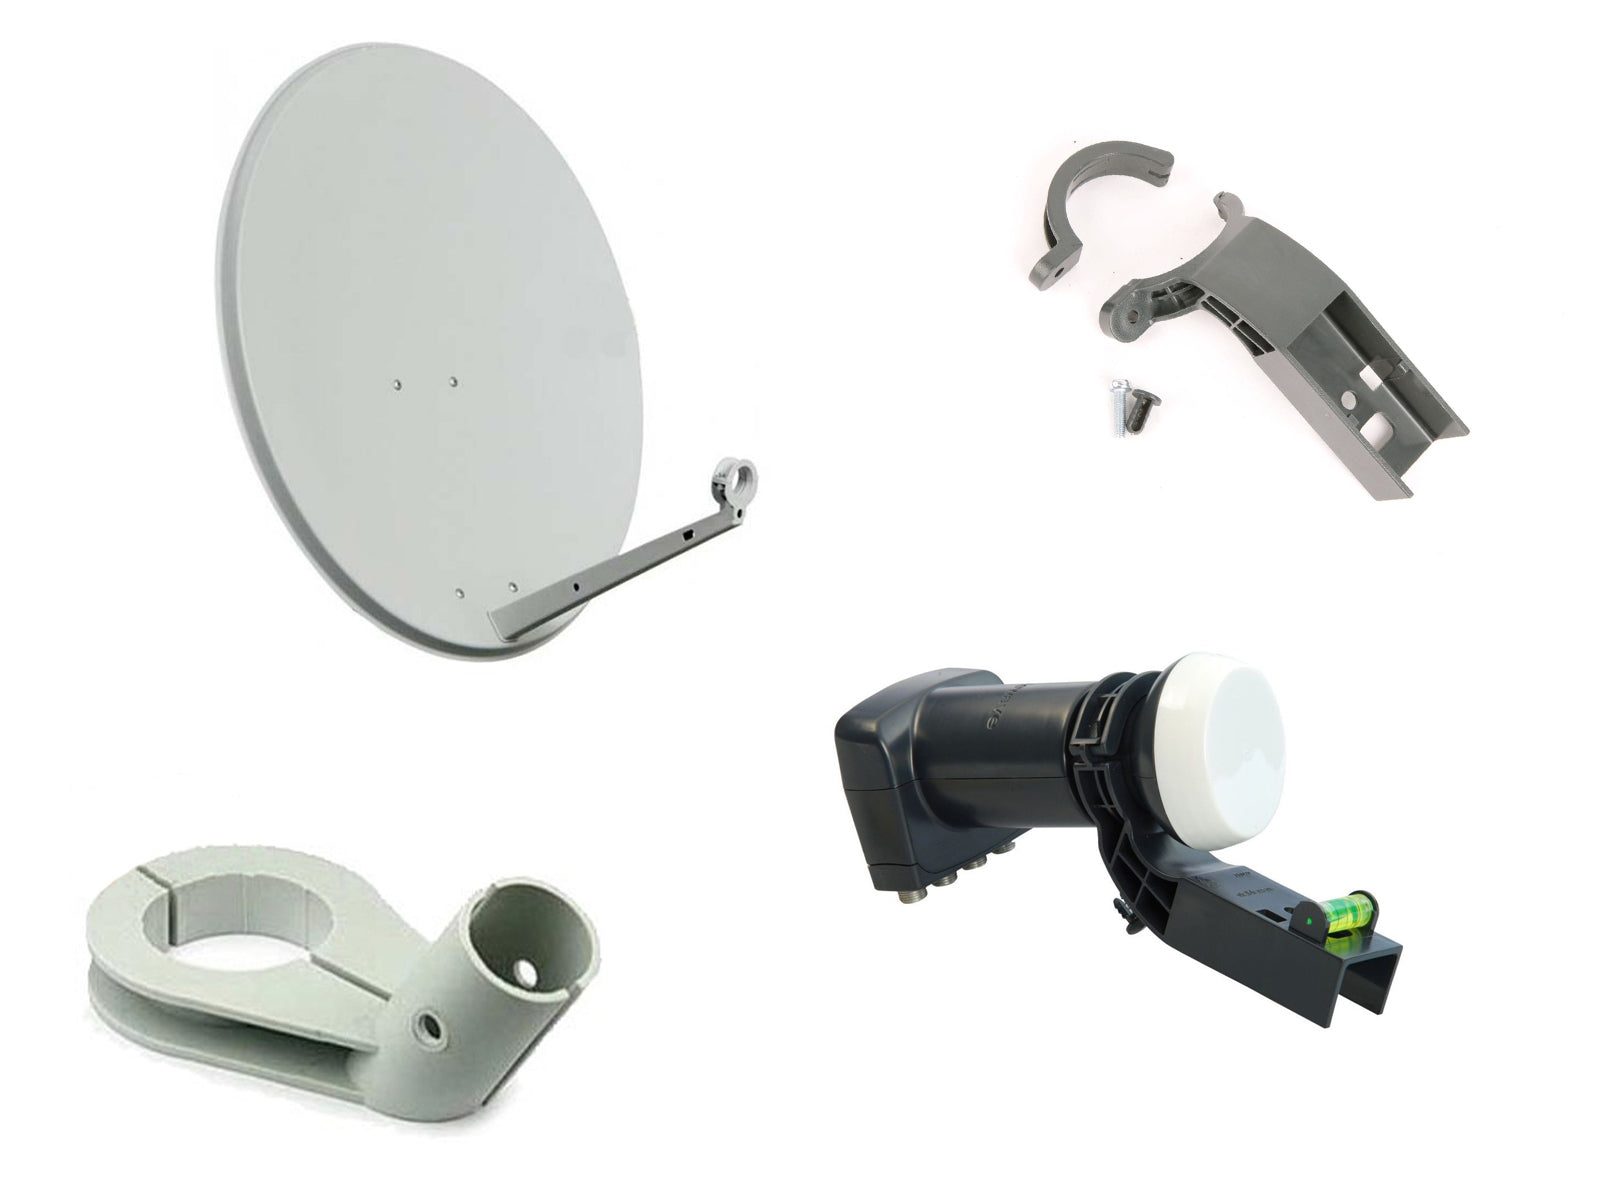 LNB HOLDER, MK3 to MK4 LNB Adaptor, Sky LNB With Snap-On Adapter, Solid Universal Satellite Dish